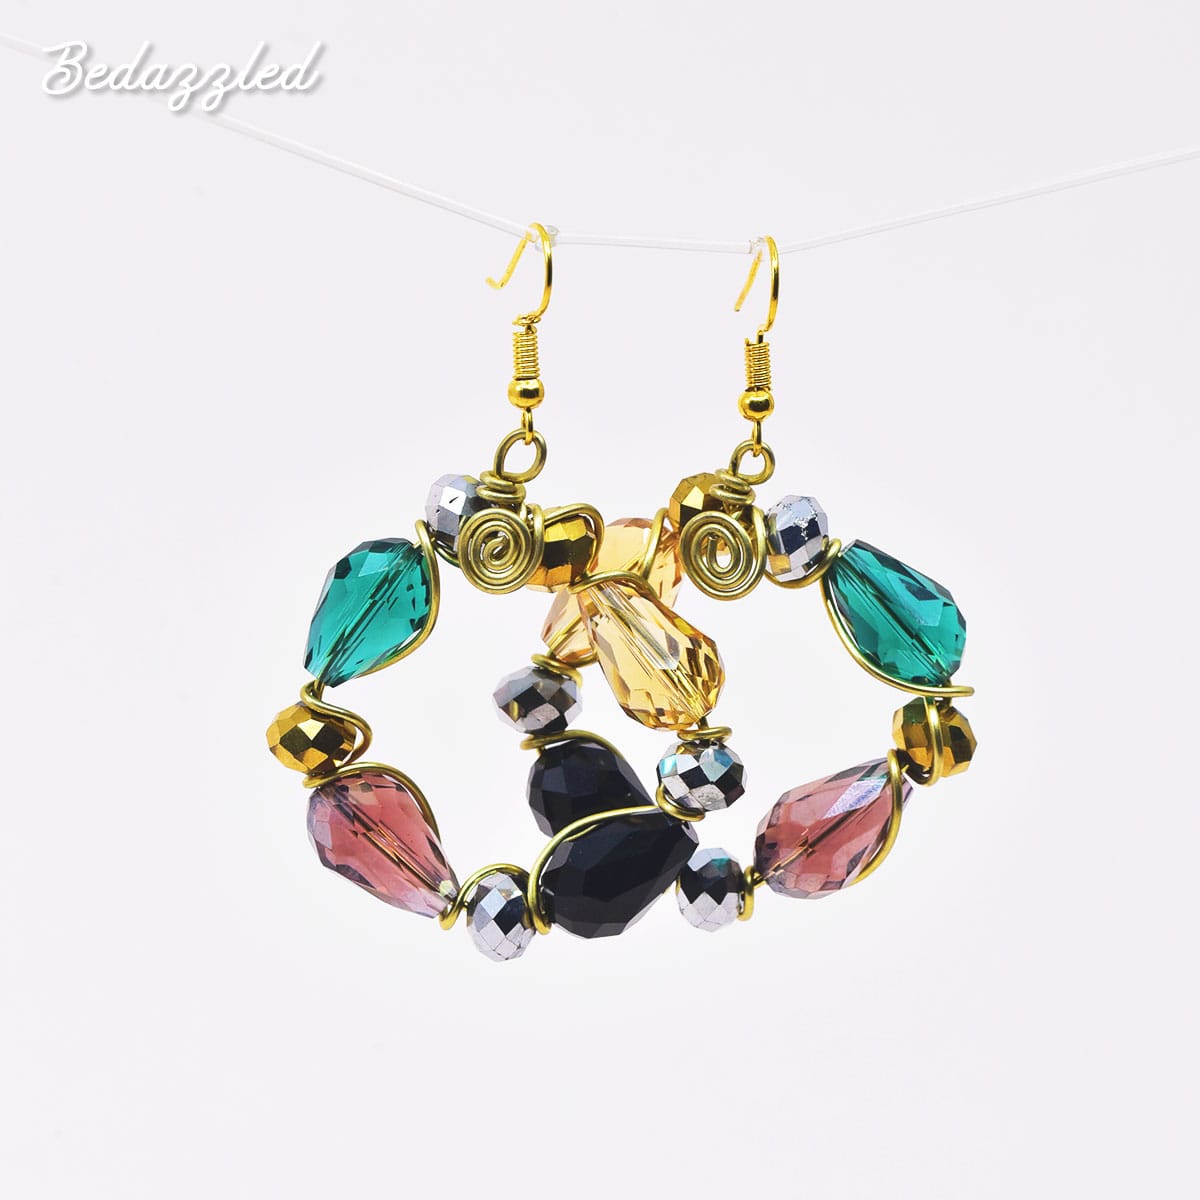 Bejeweled Style 6 - Earrings